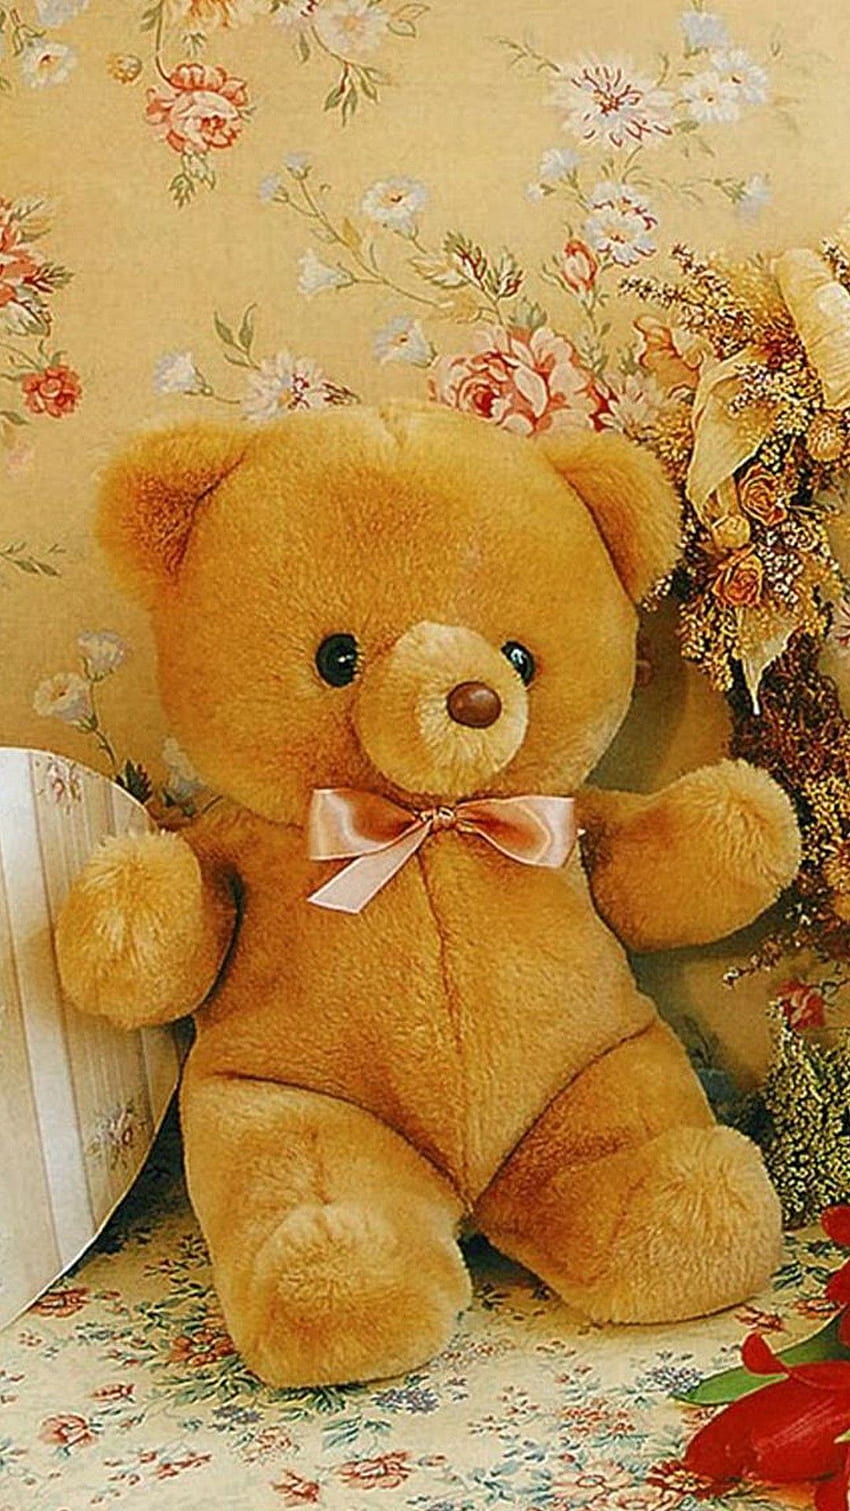 Top 999+ Cute Bear Wallpaper Full HD, 4K✓Free to Use